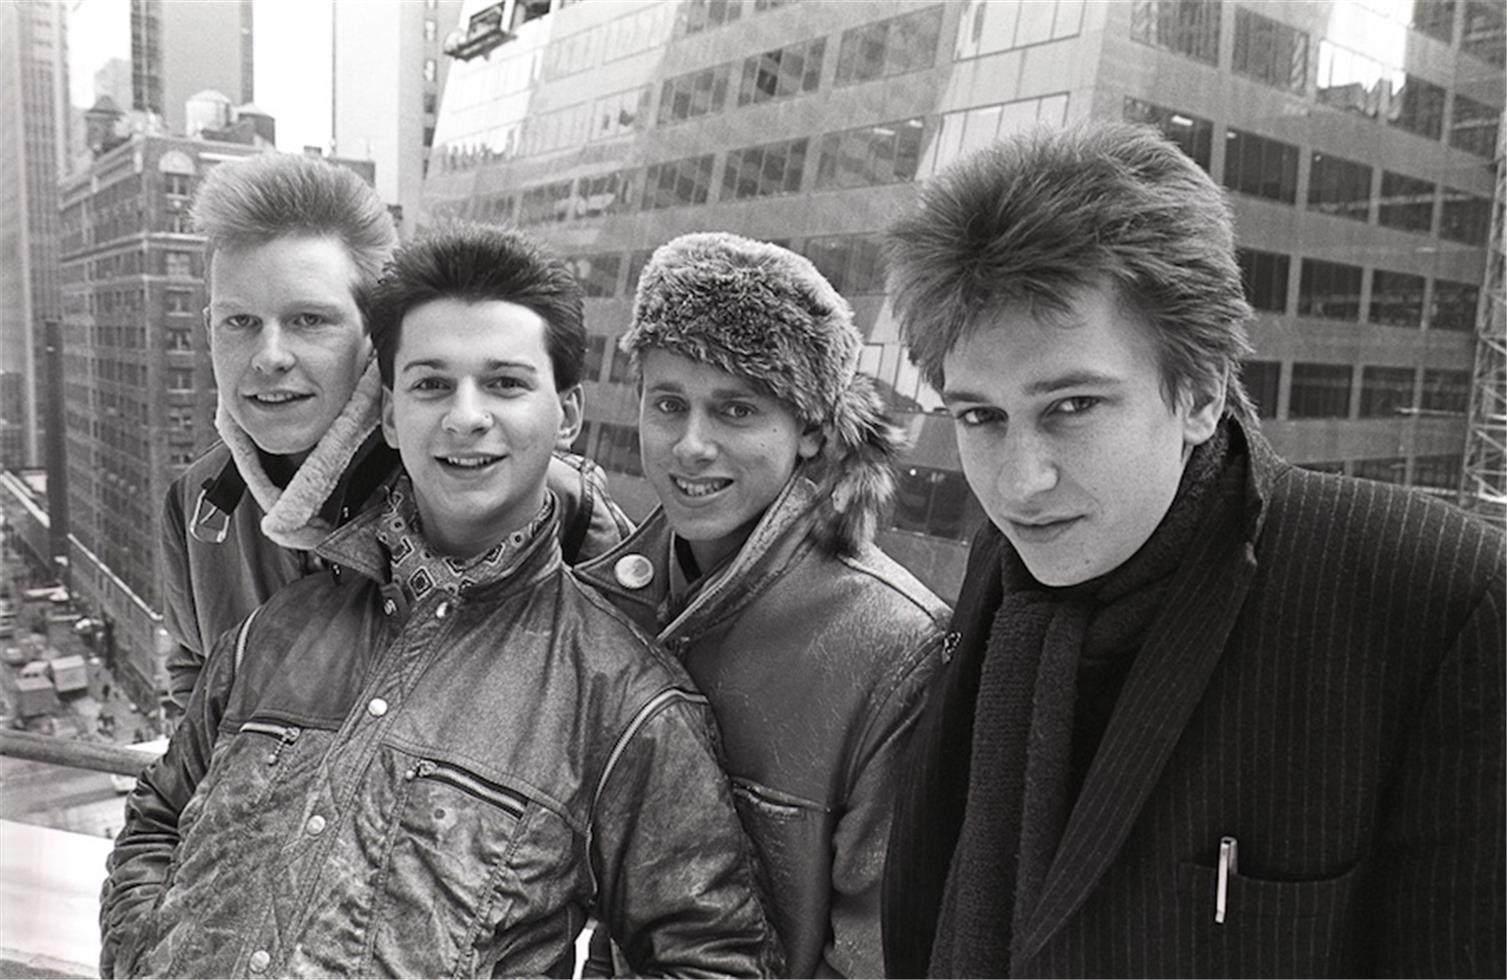 Allan Tannenbaum Black and White Photograph - Depeche Mode, NYC, 1982